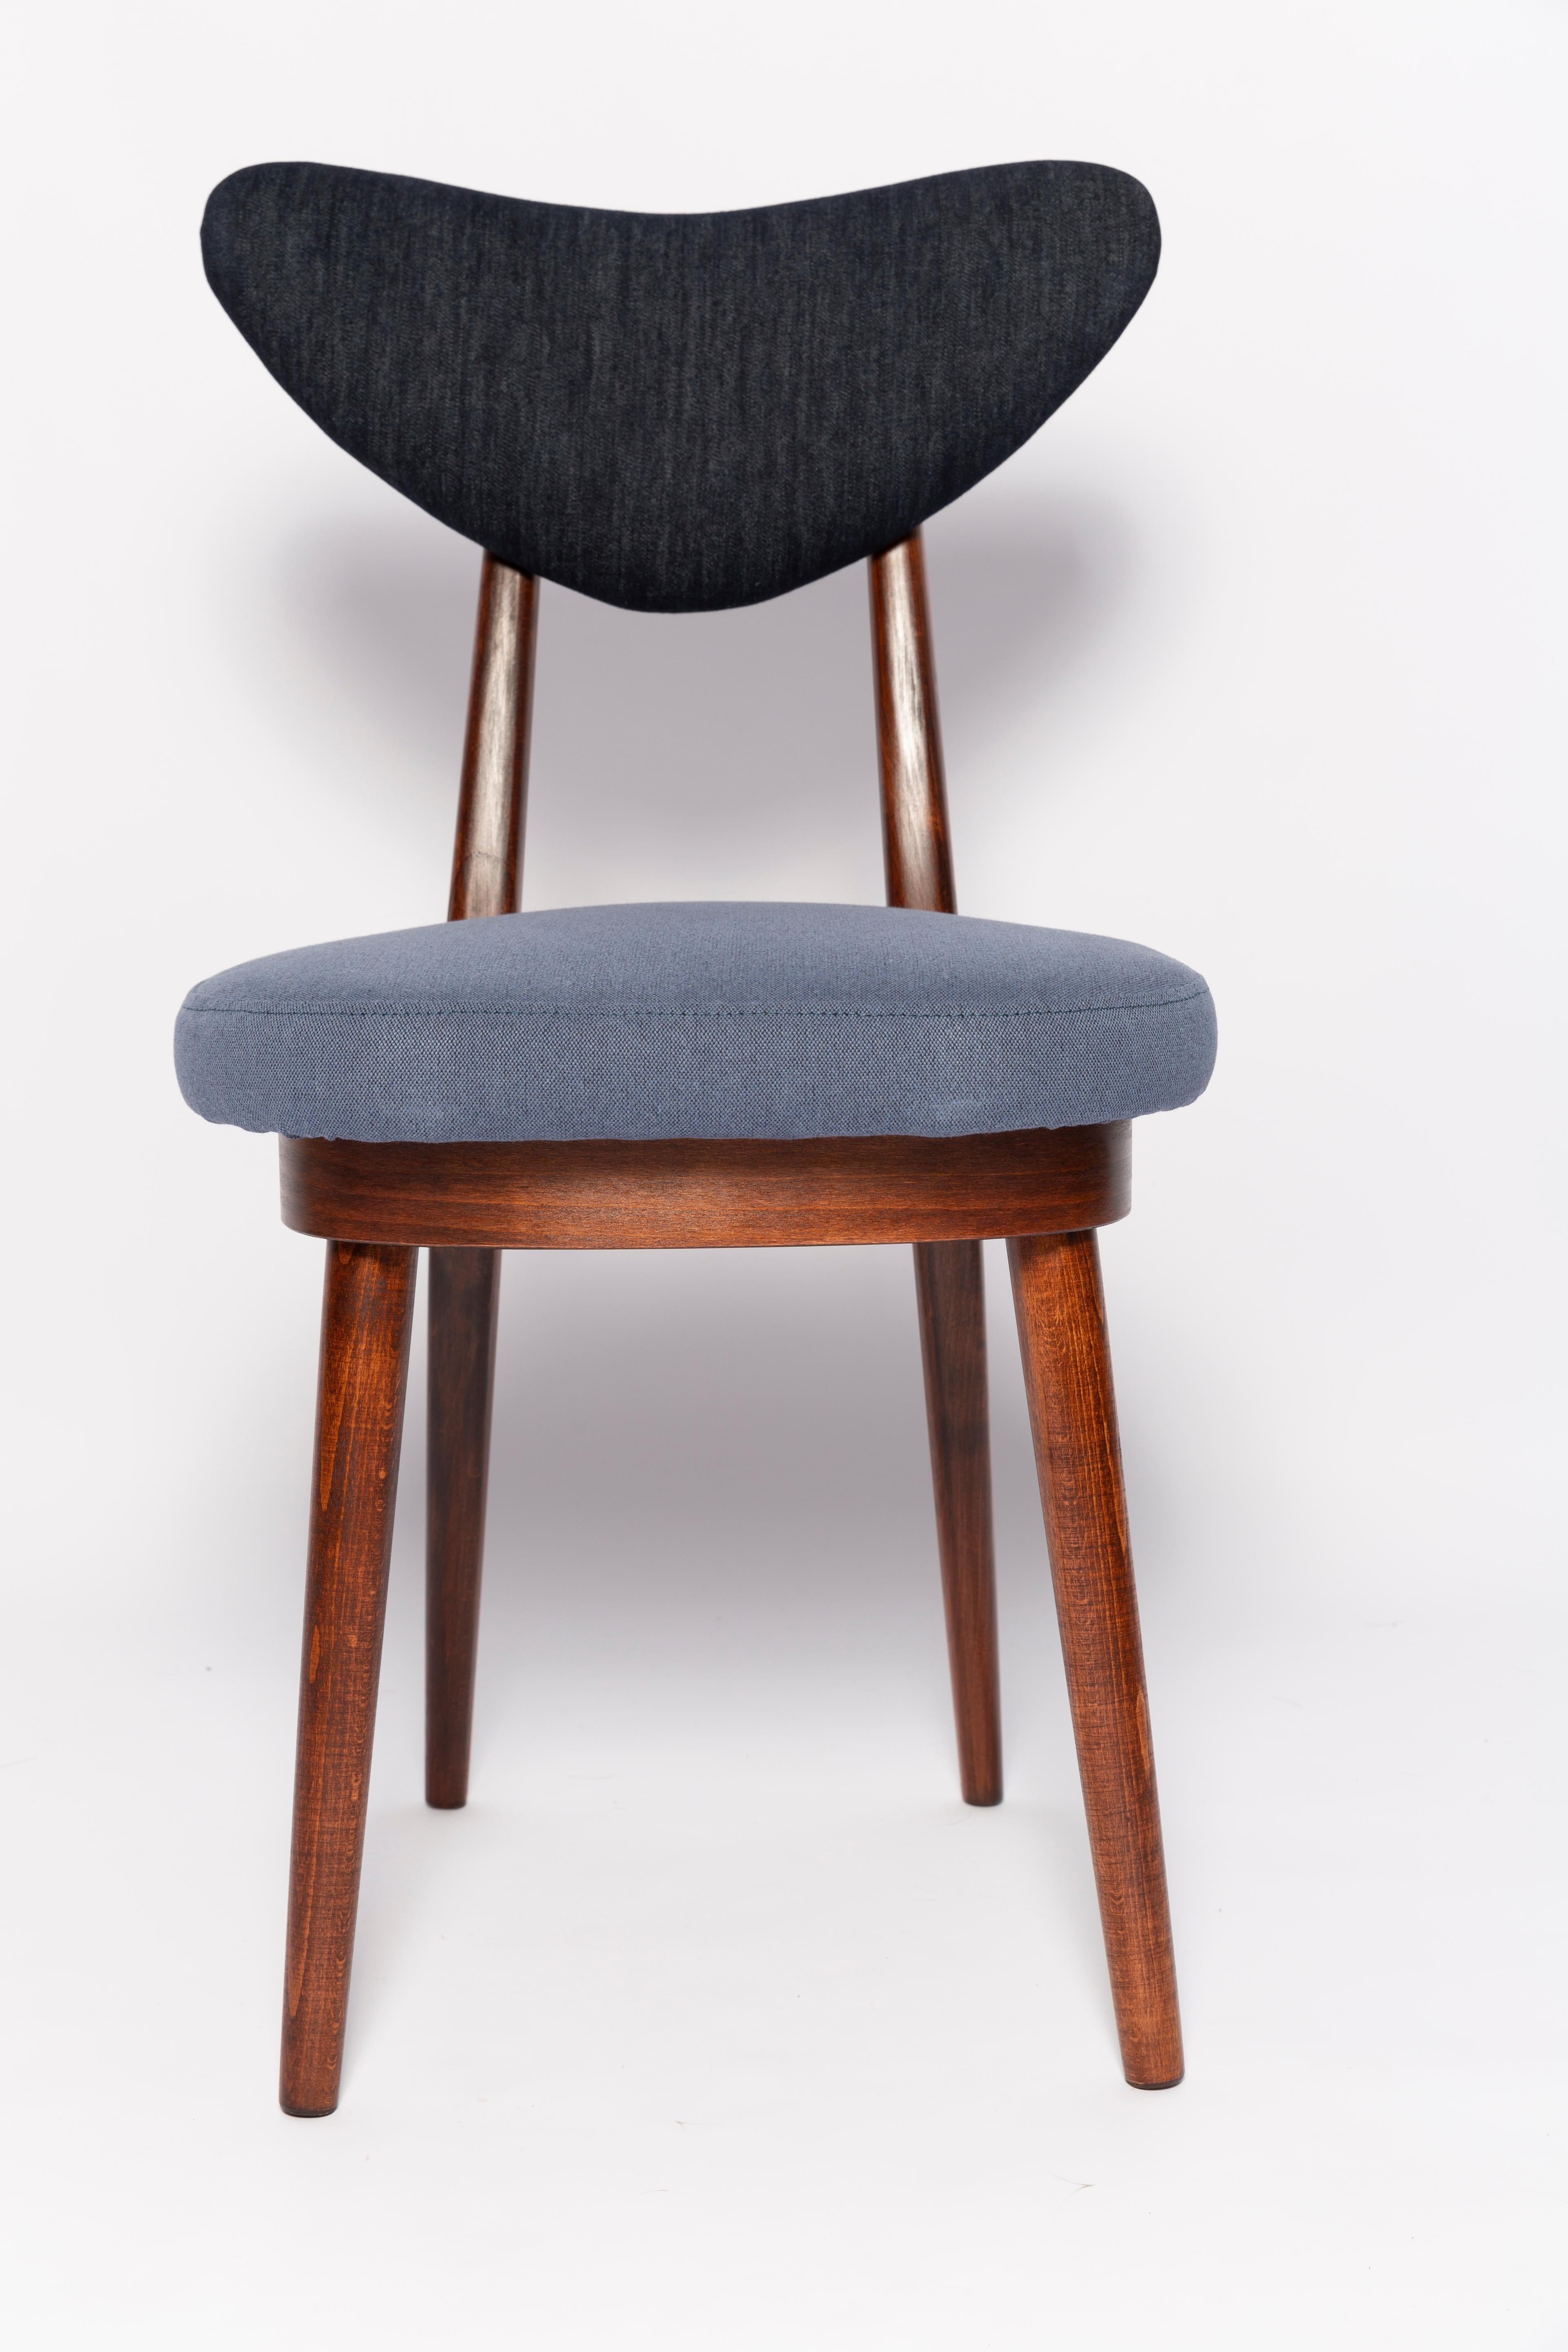 20th Century Midcentury Medium and Dark Blue Denim Heart Chair, Europe, 1960s For Sale